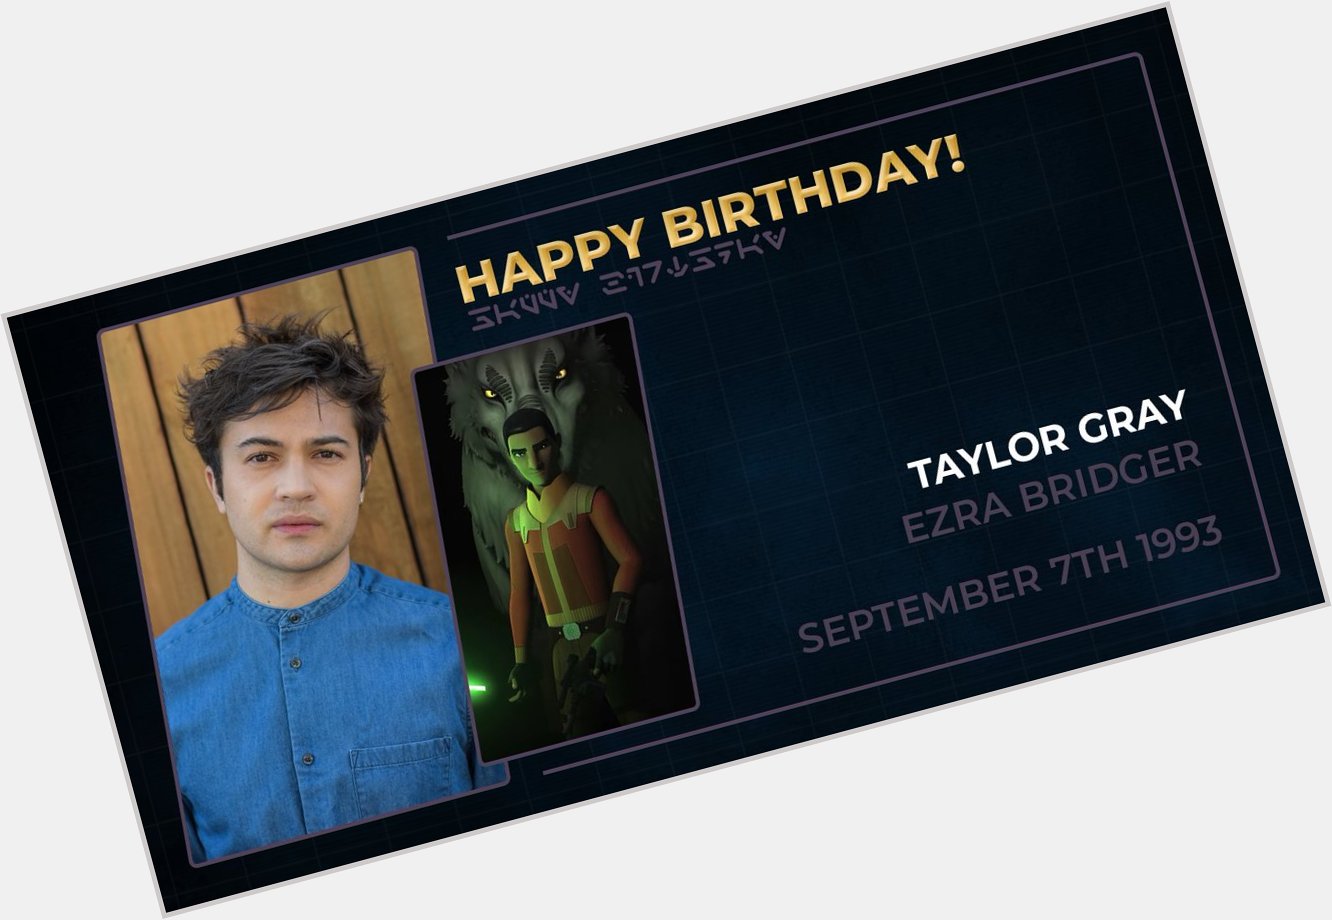 Happy birthday to Taylor Gray, who voiced Ezra Bridger in   